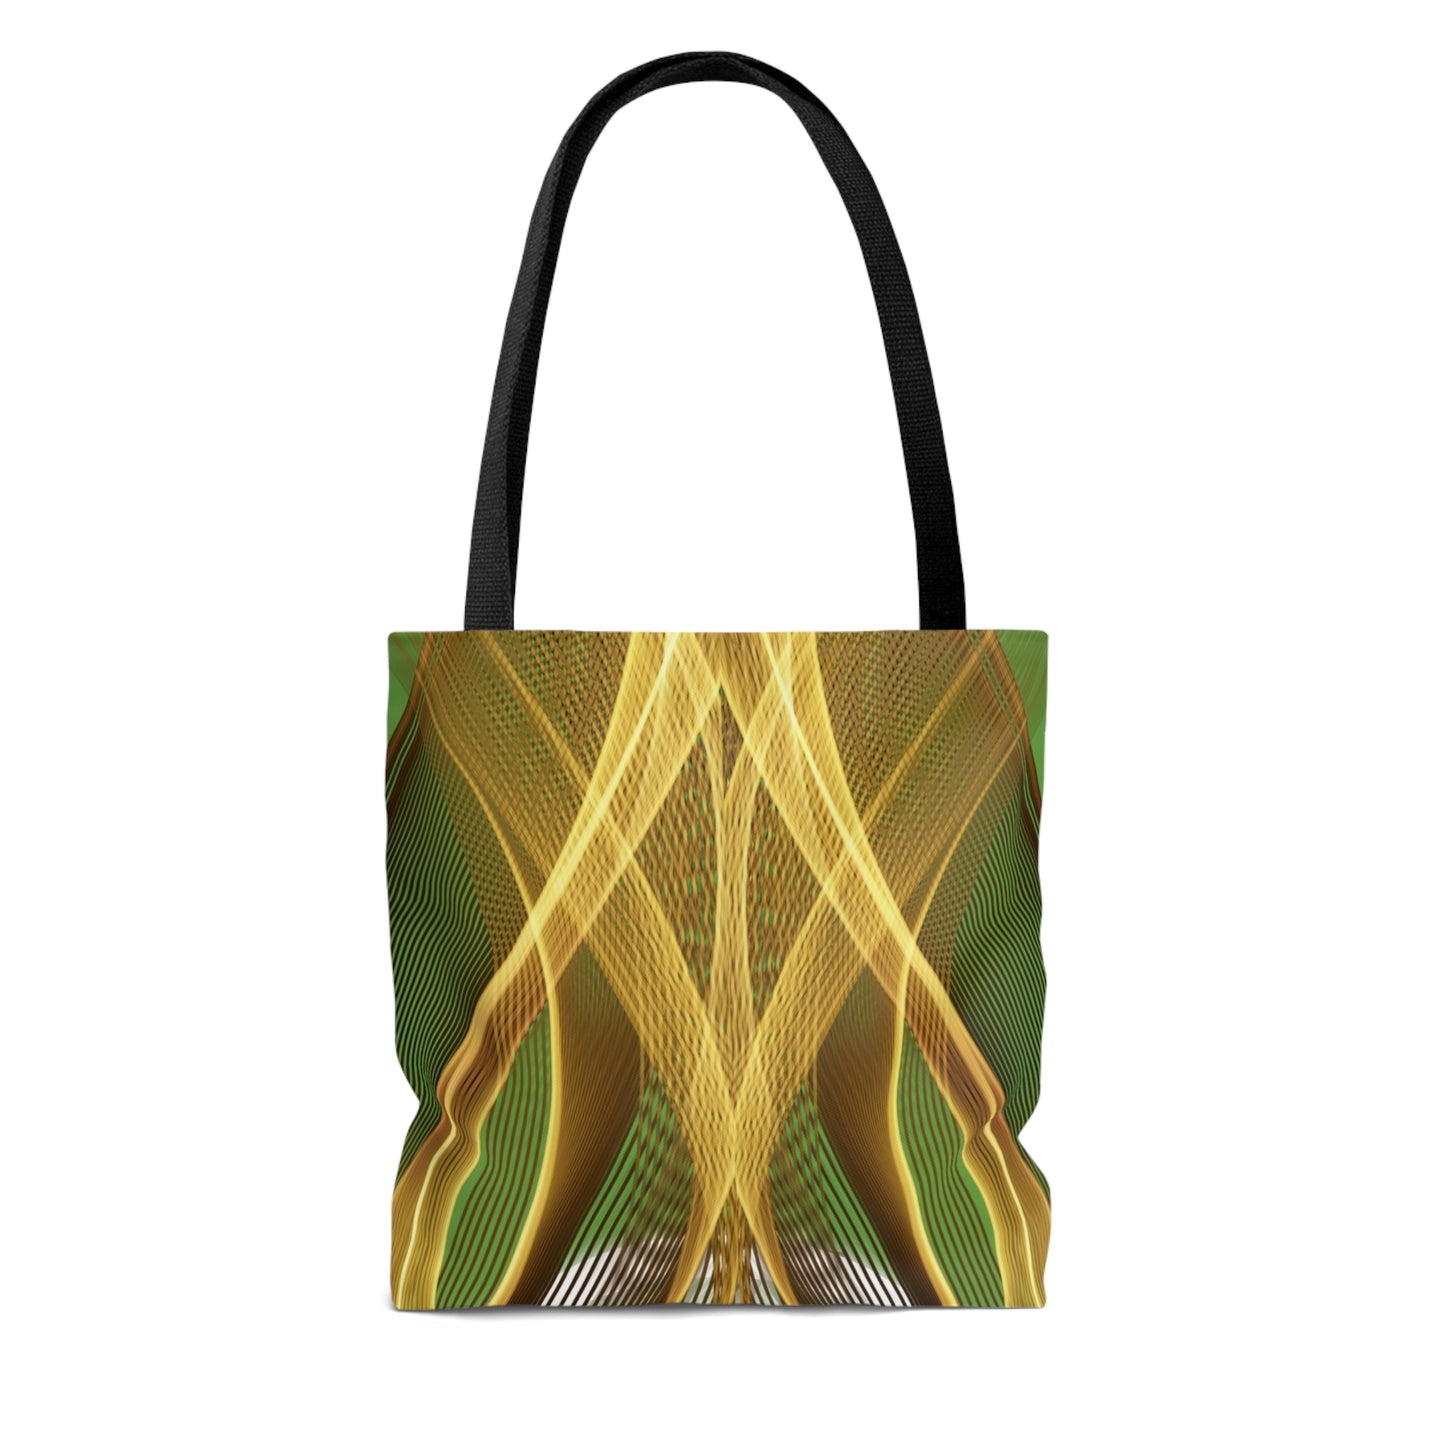 Green Bridal Tote | Custom Bridal Shower Gift Bag | Wedding Handbag | Gift For Bride | Beach Wedding Shoulder Bag